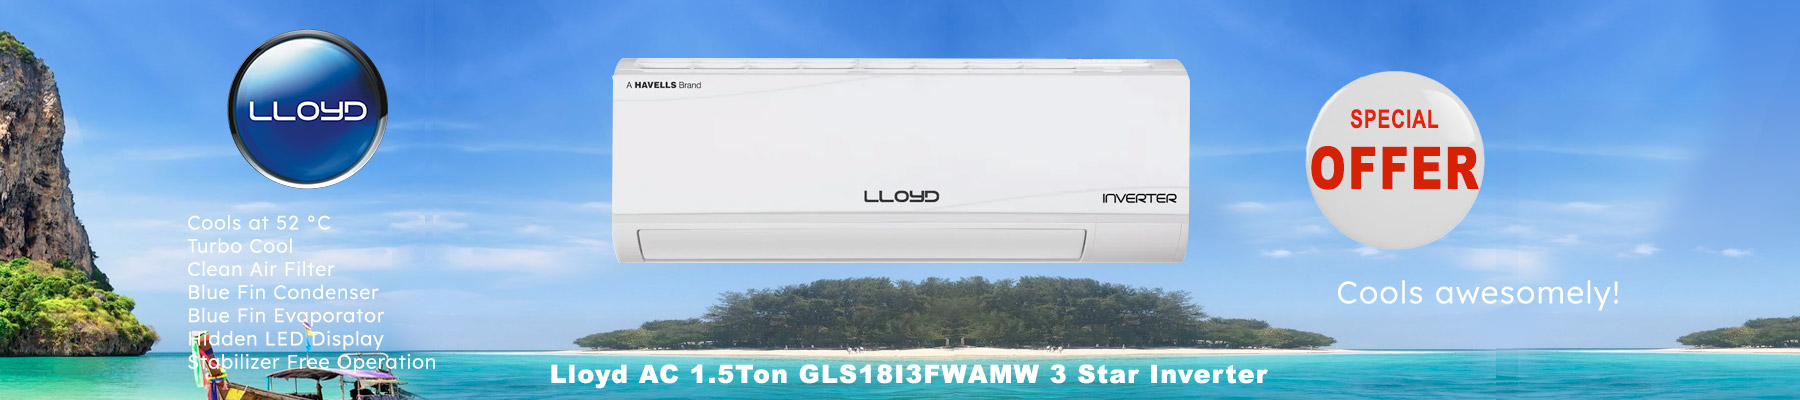 Lloyd AC 1.5Ton GLS18I3FWAMW 3 Star Inverter